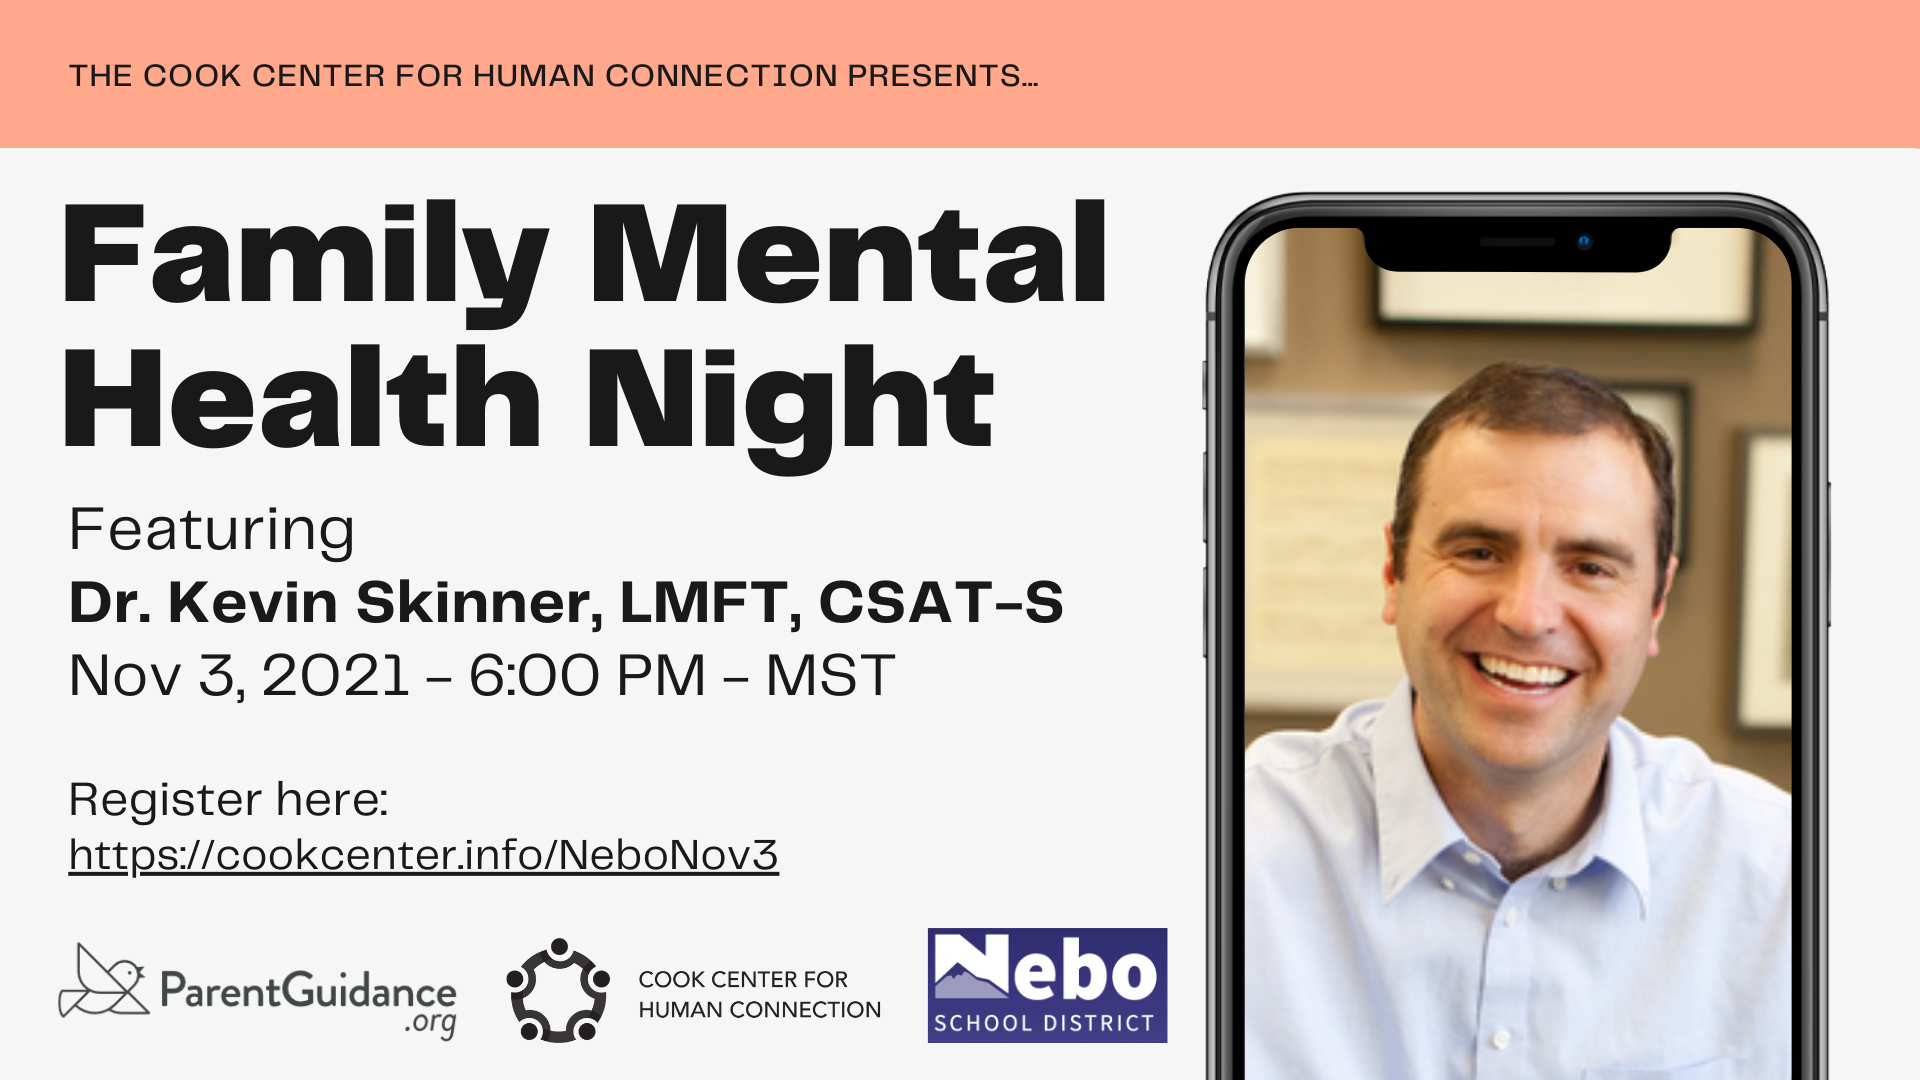 Family Mental Health Night Featuring Dr. Kevin Skinner, LMFT, CSAT-S Nov. 3, 2021 6:00 pm MST